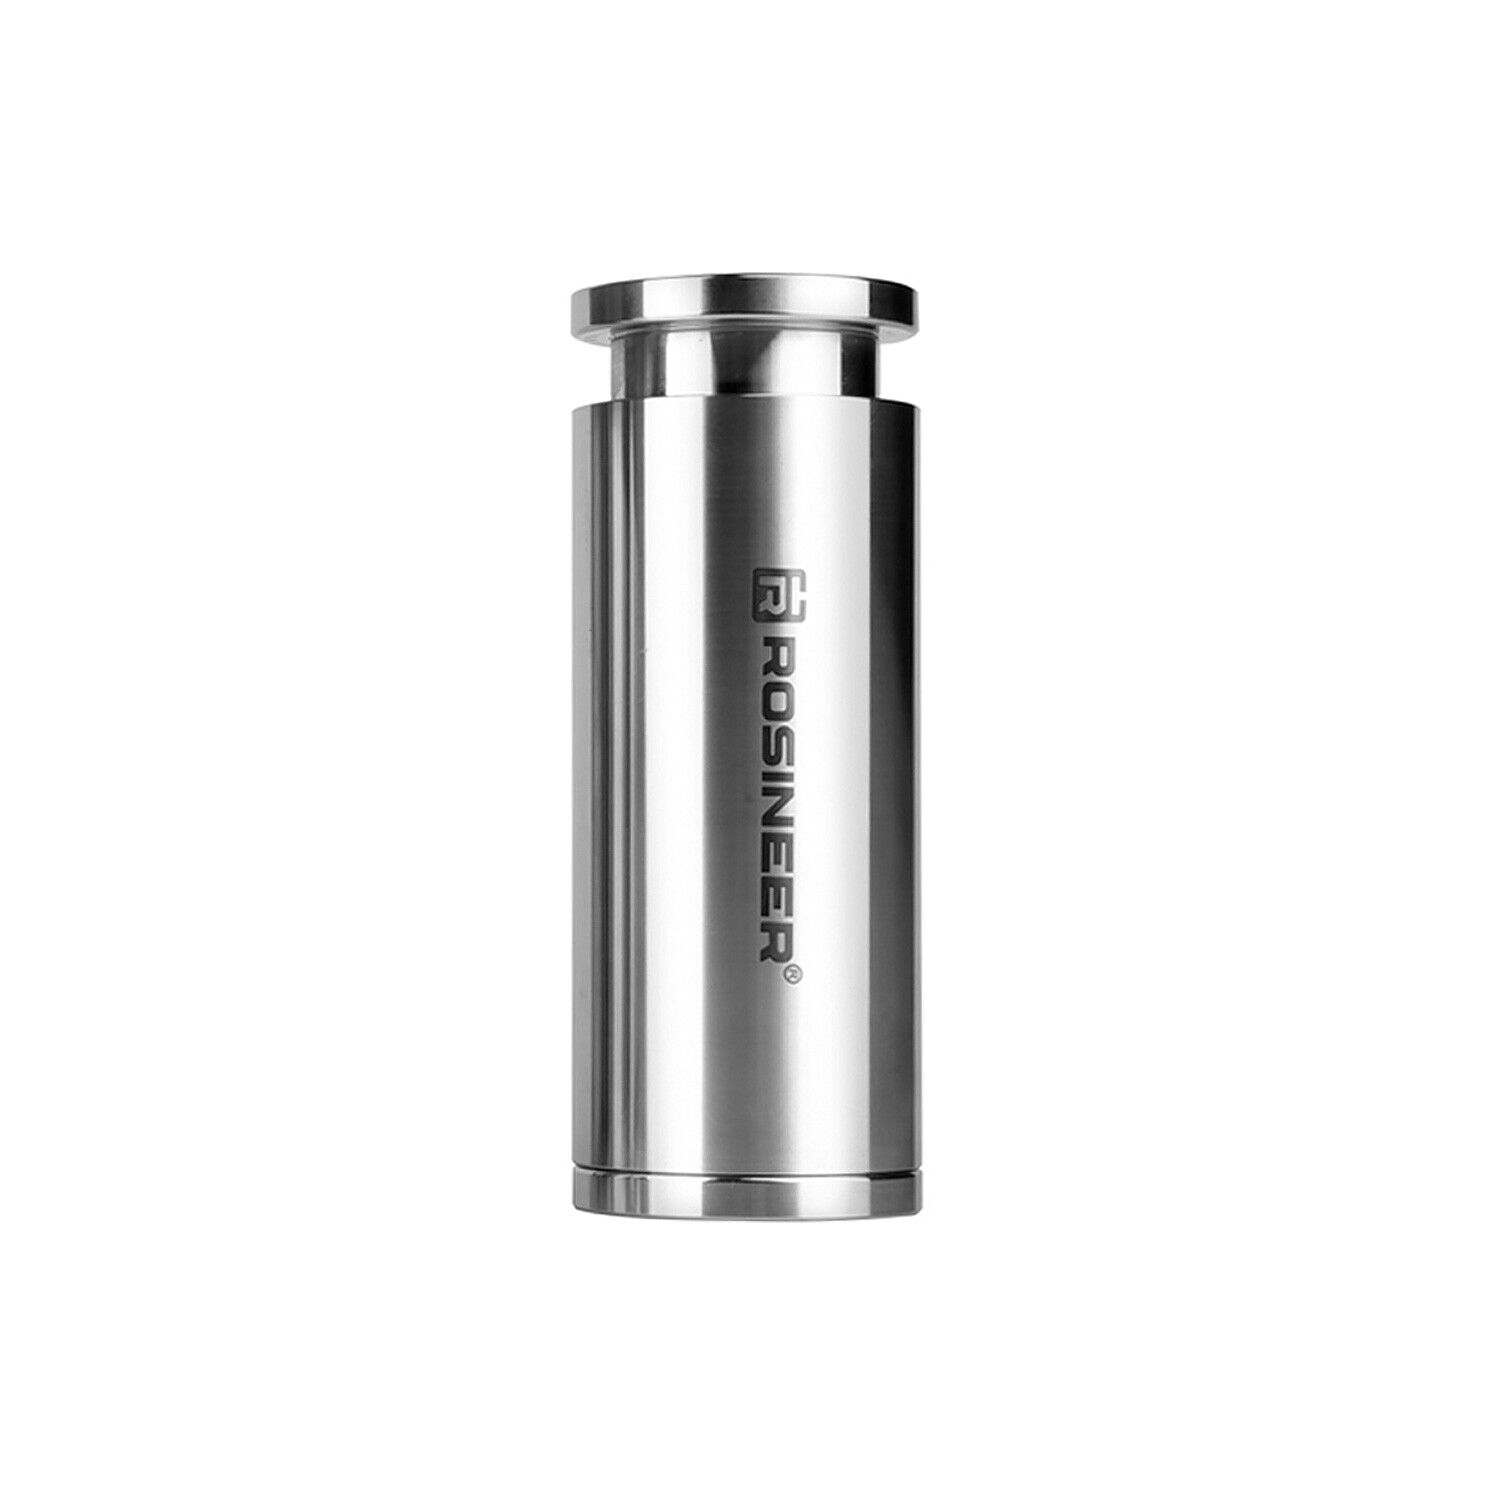 Rosineer Cylindrical Pre-Press Mold, Food-Grade Steel, 30 mm Internal Diameter